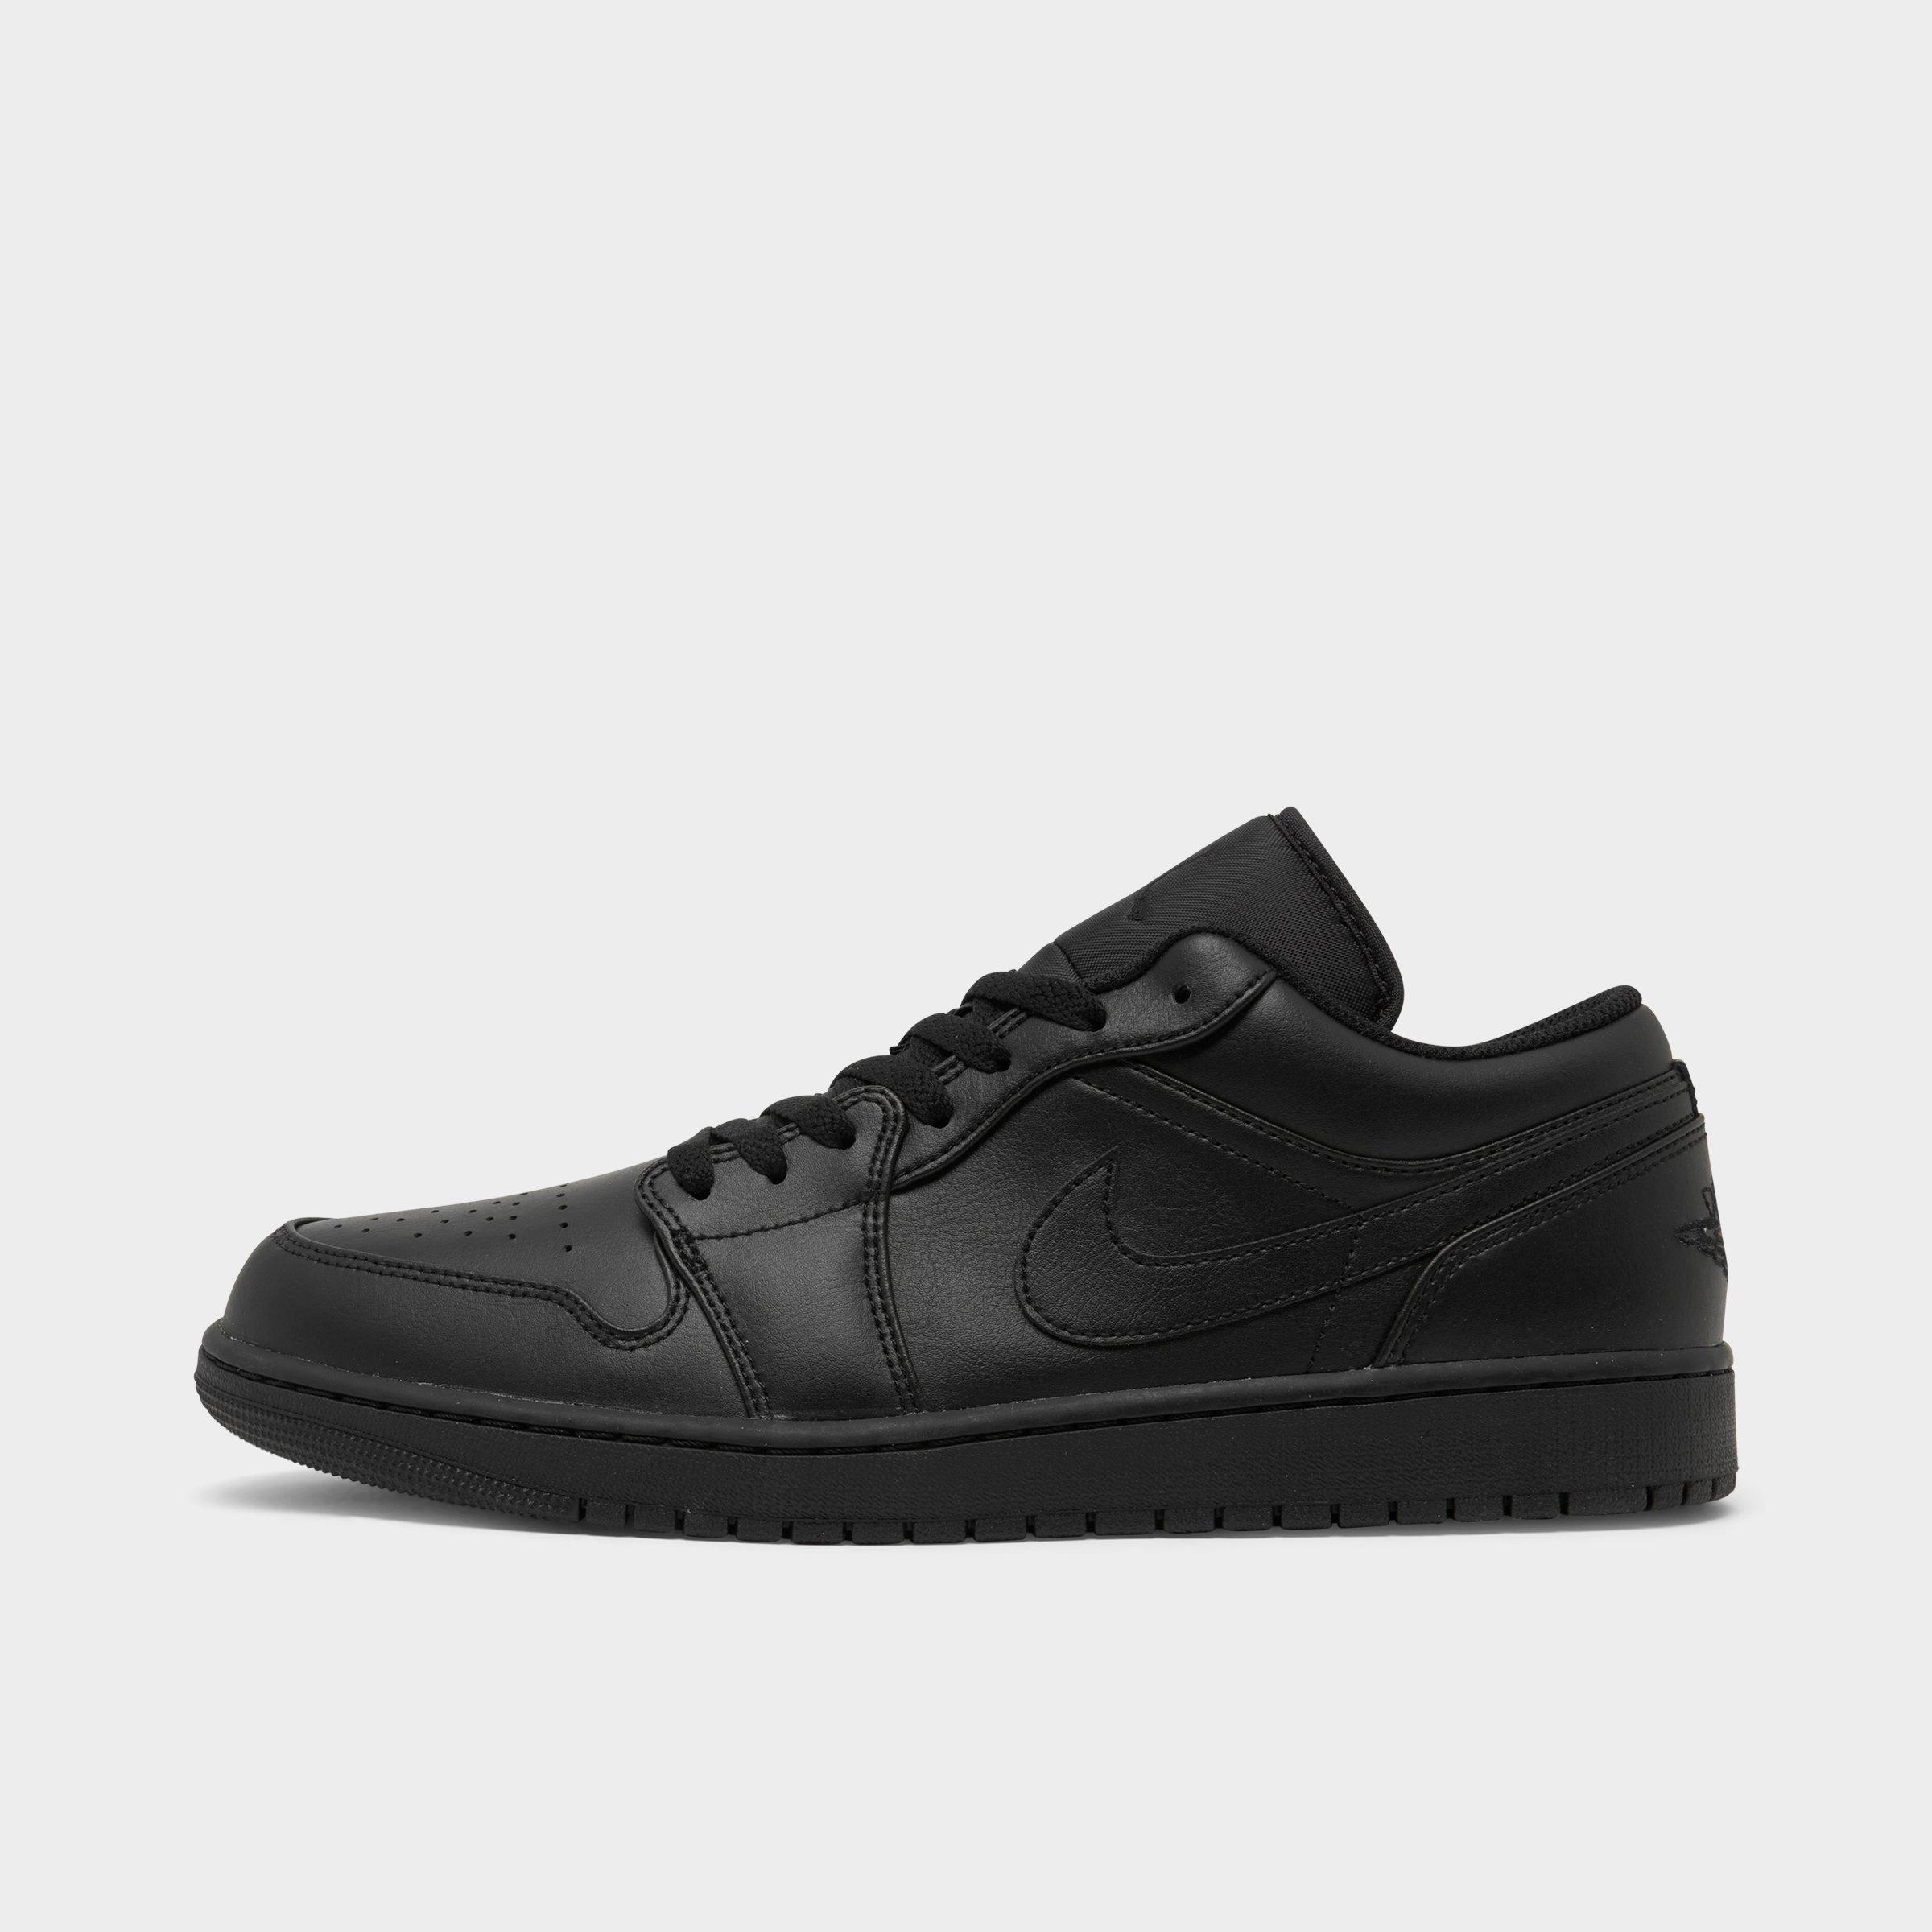 Nike Jordan Air Retro 1 Low Casual Shoes Size 12.0 Leather In Black/black/black